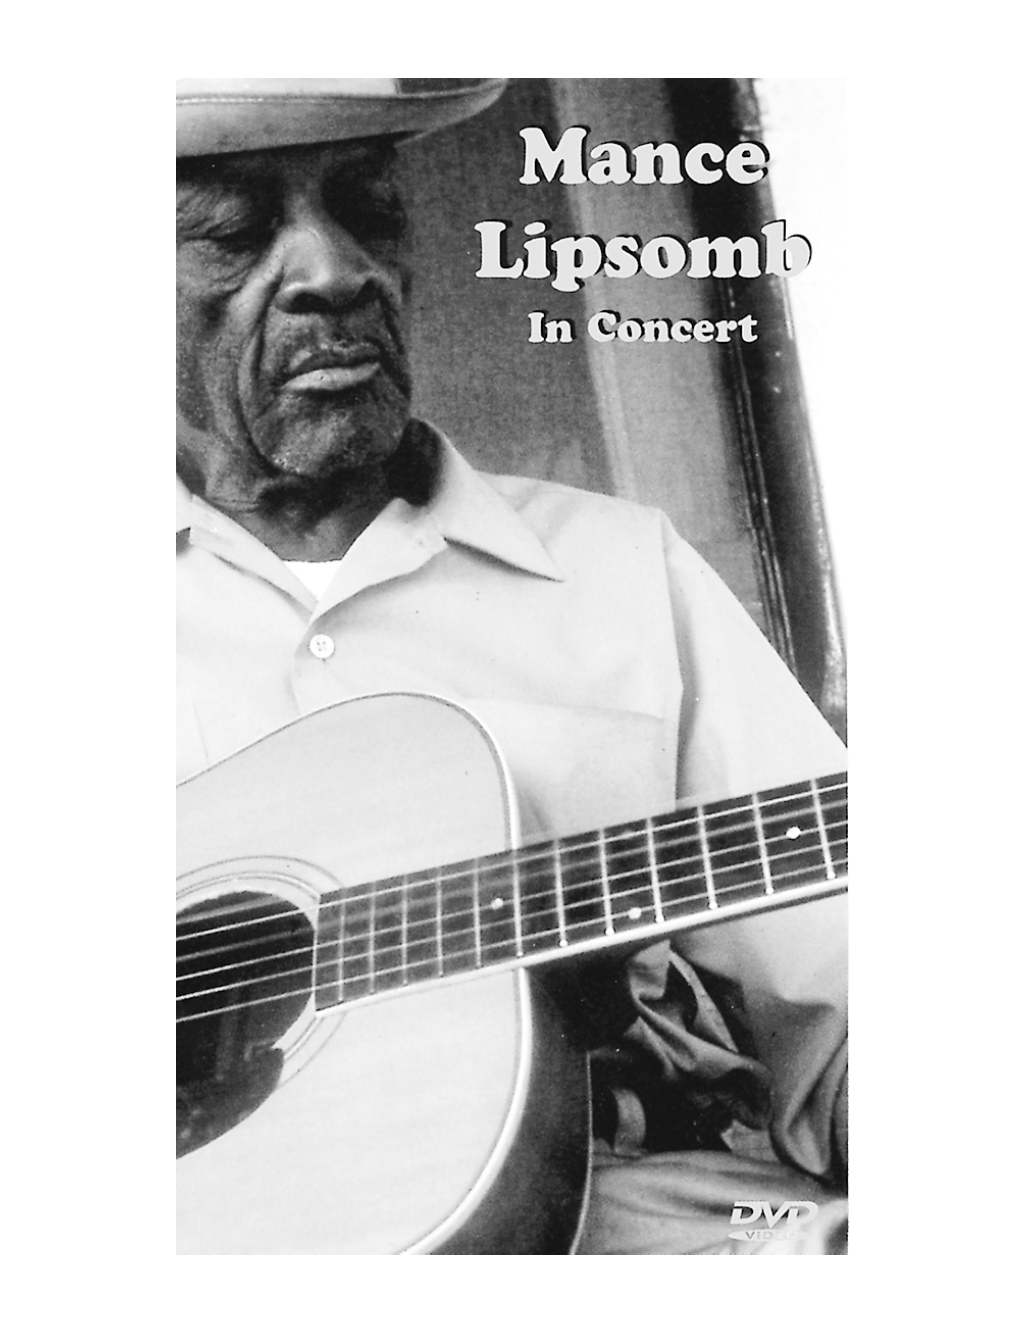 Mance Lipscomb's Life & Music